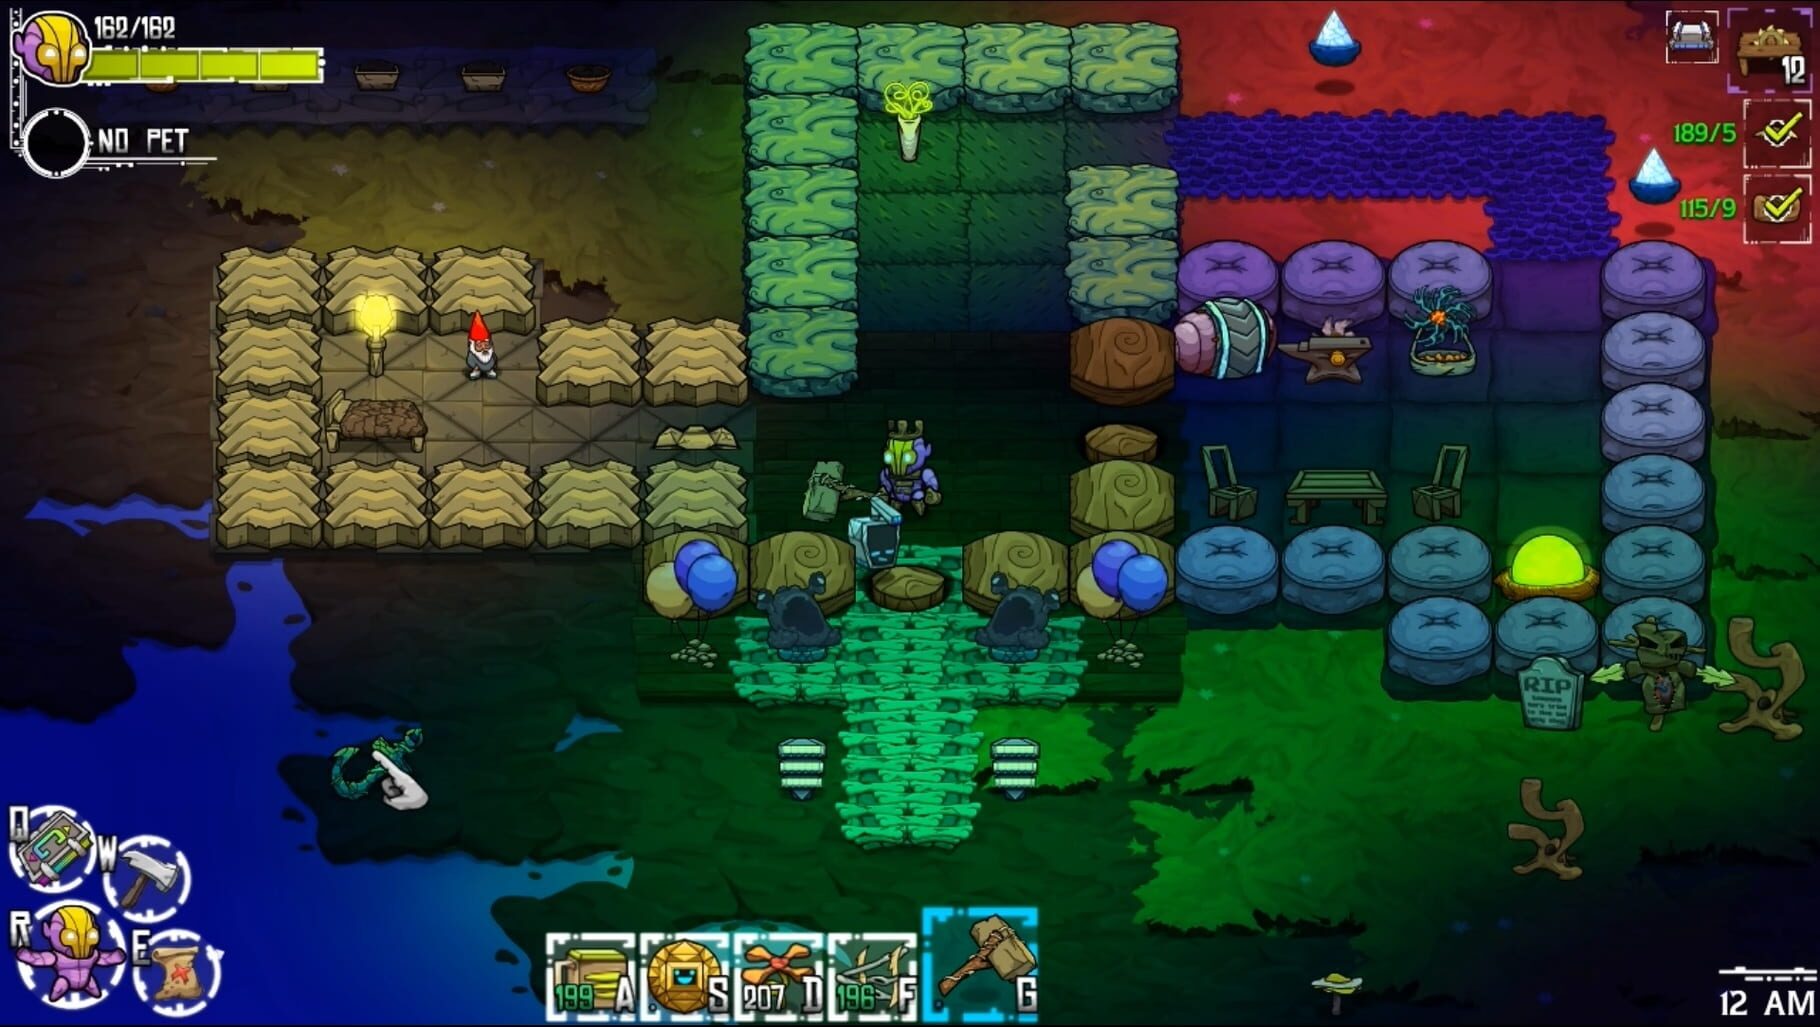 Crashlands screenshot